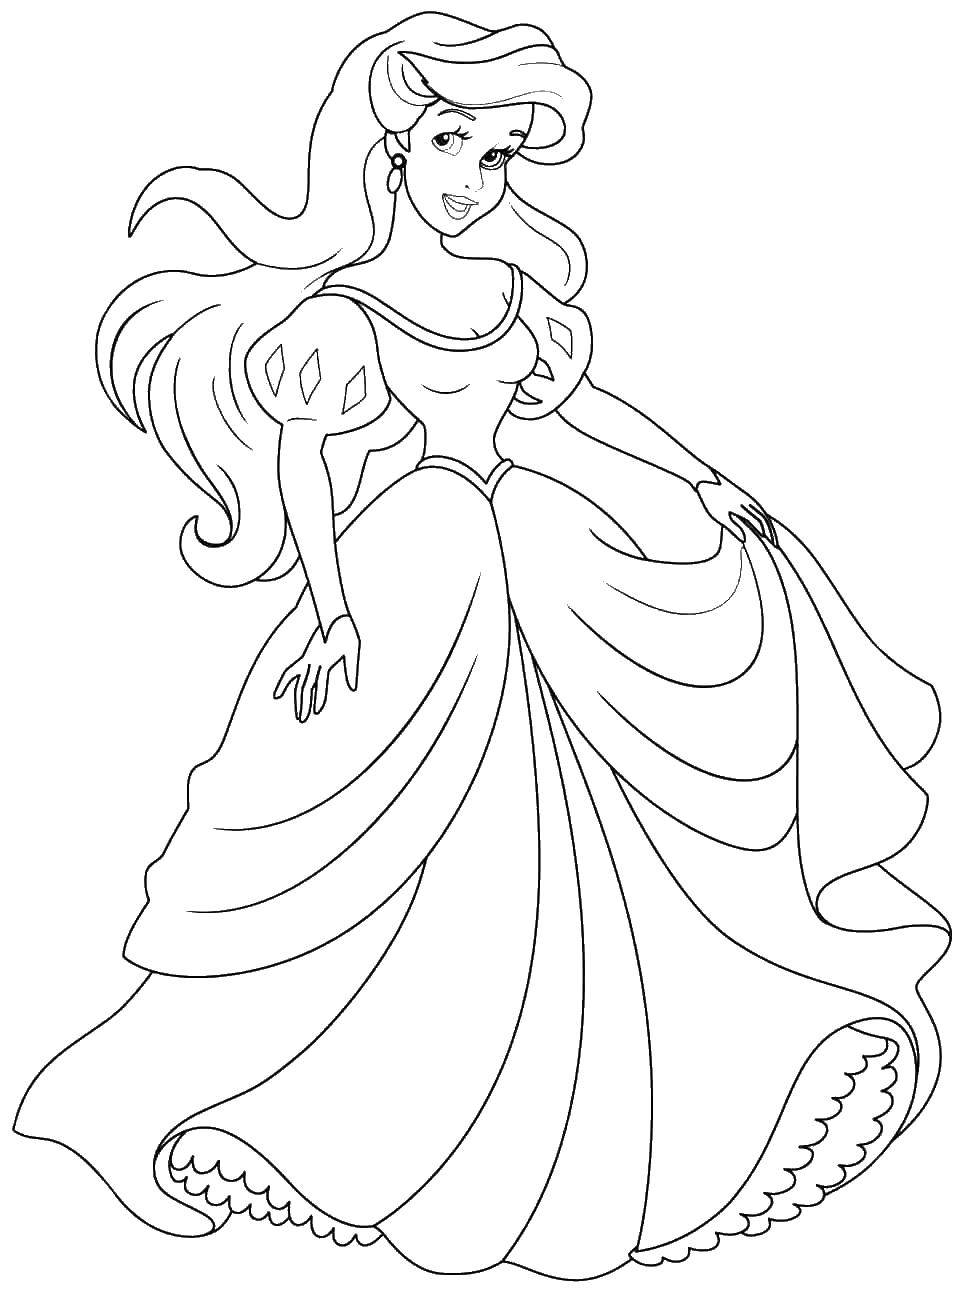 Coloring Mermaid Ariel in a dress. Category The little mermaid. Tags:  Ariel, mermaid.